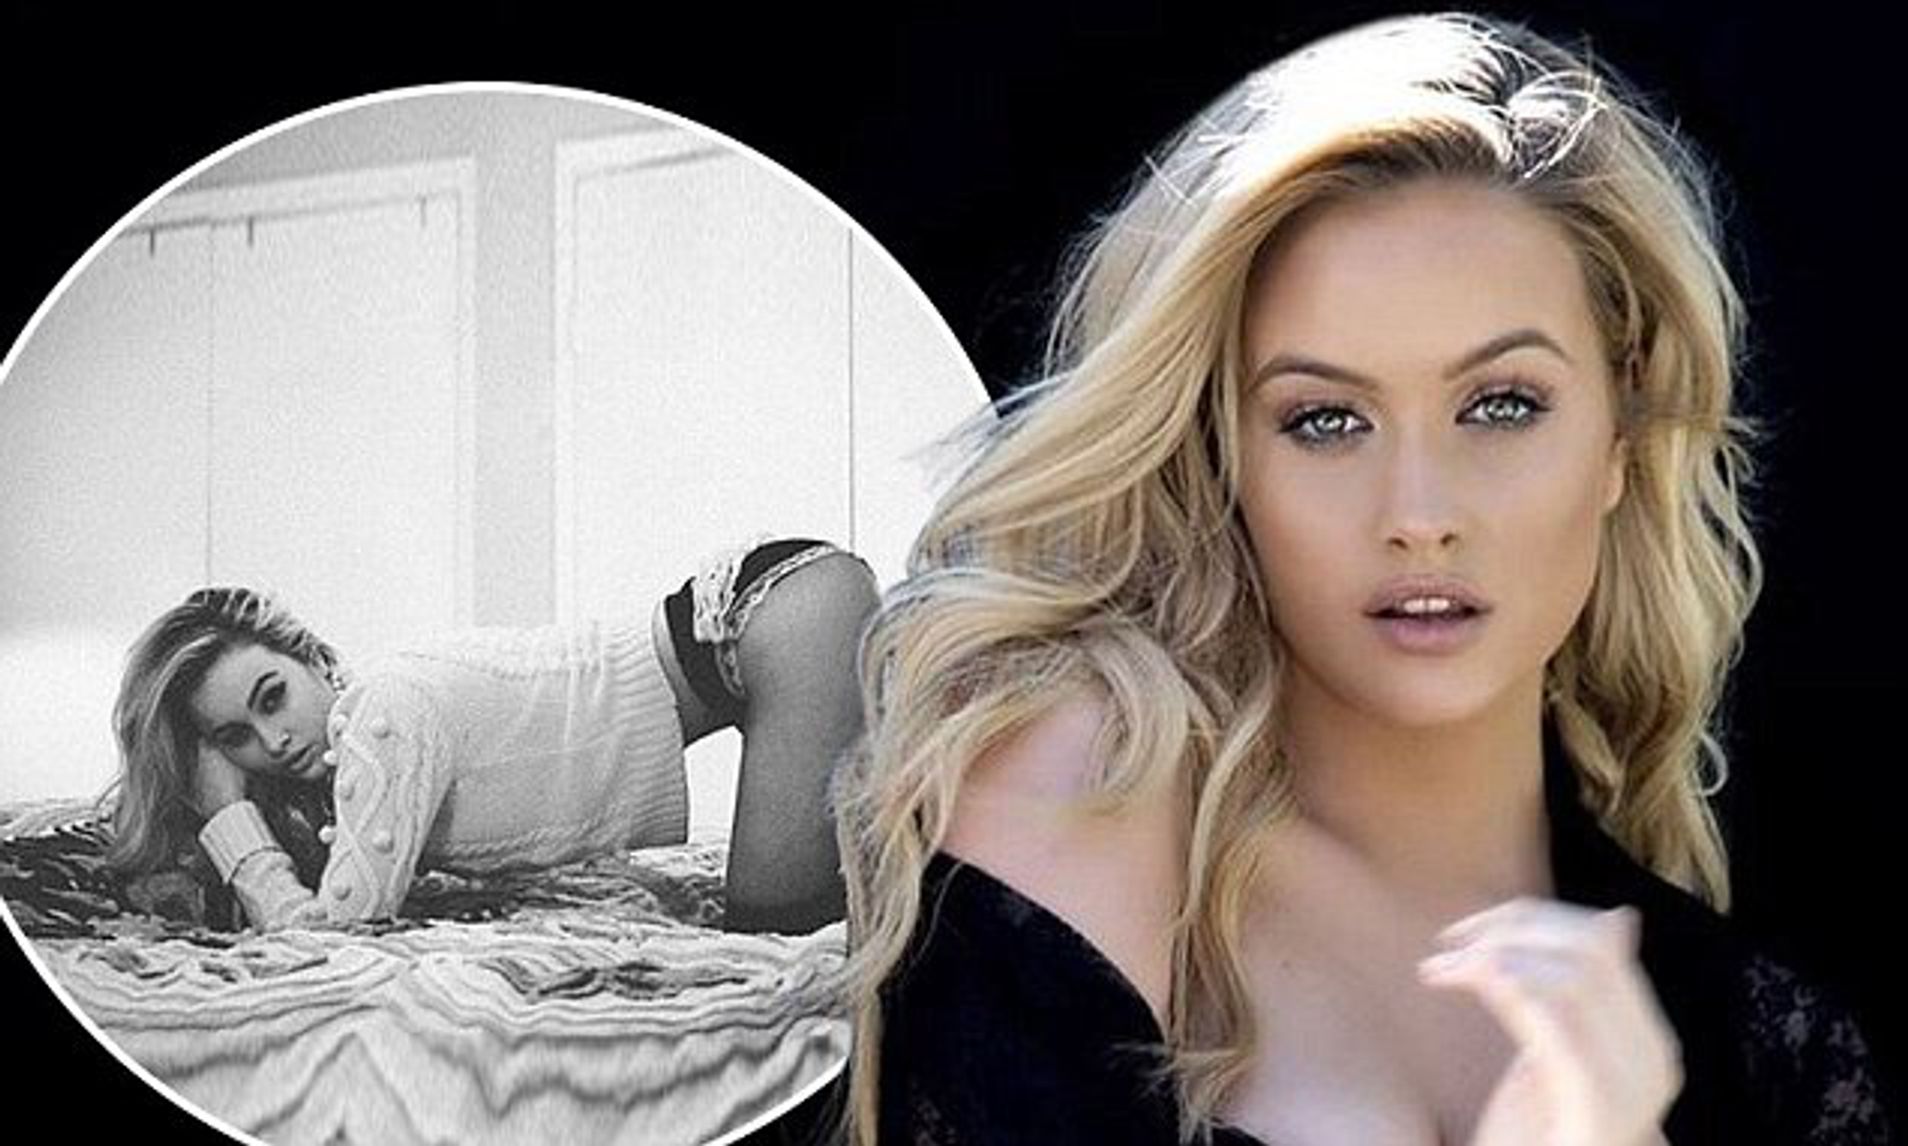 Huge breasts | Playboy model complains about big breasts | Top Banger